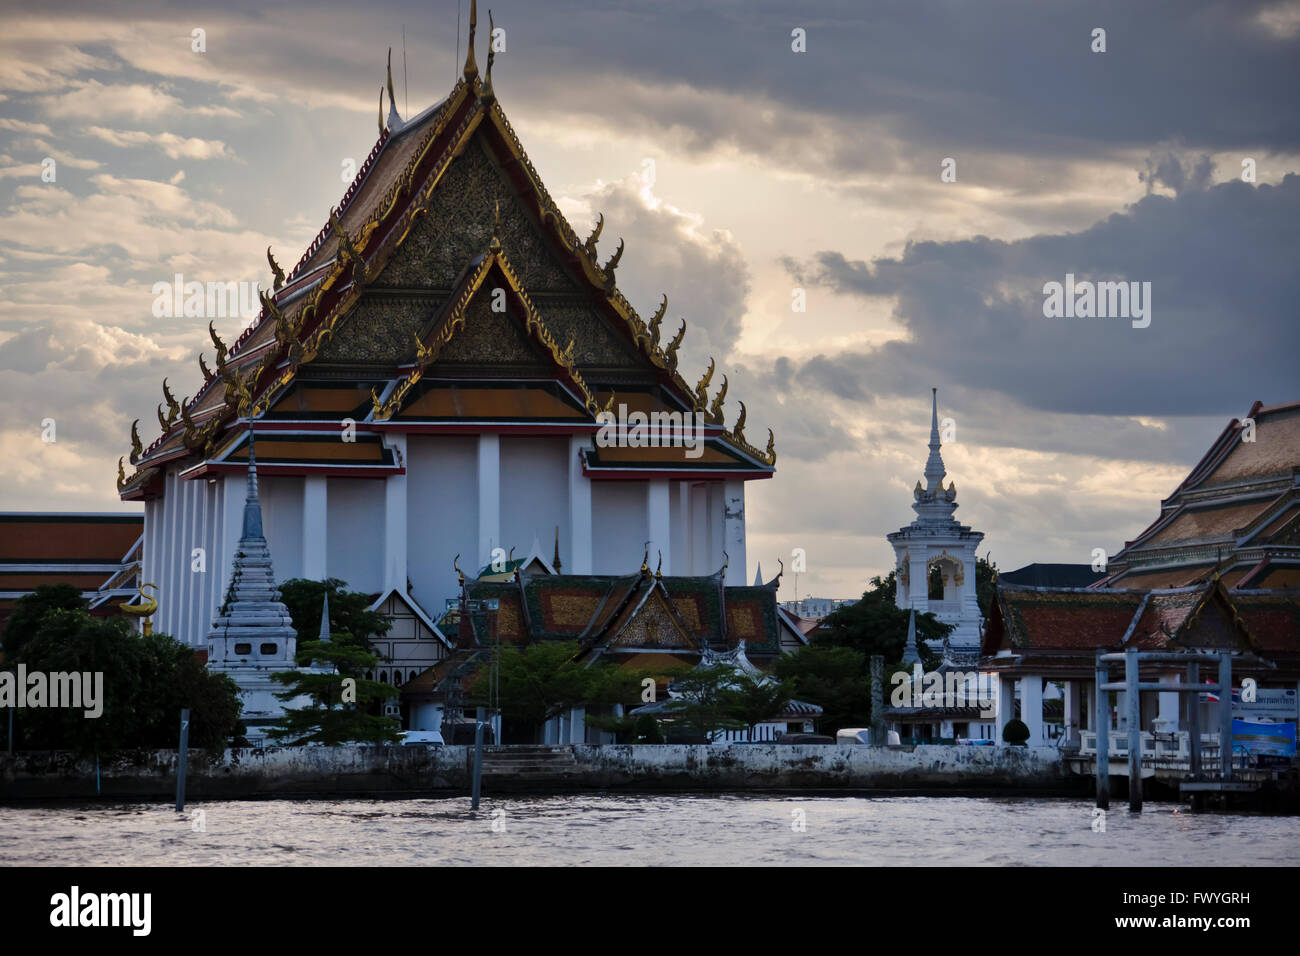 Wat Kalayanamitr le long de la rivière Chao Praya, à Bangkok, Thaïlande Banque D'Images